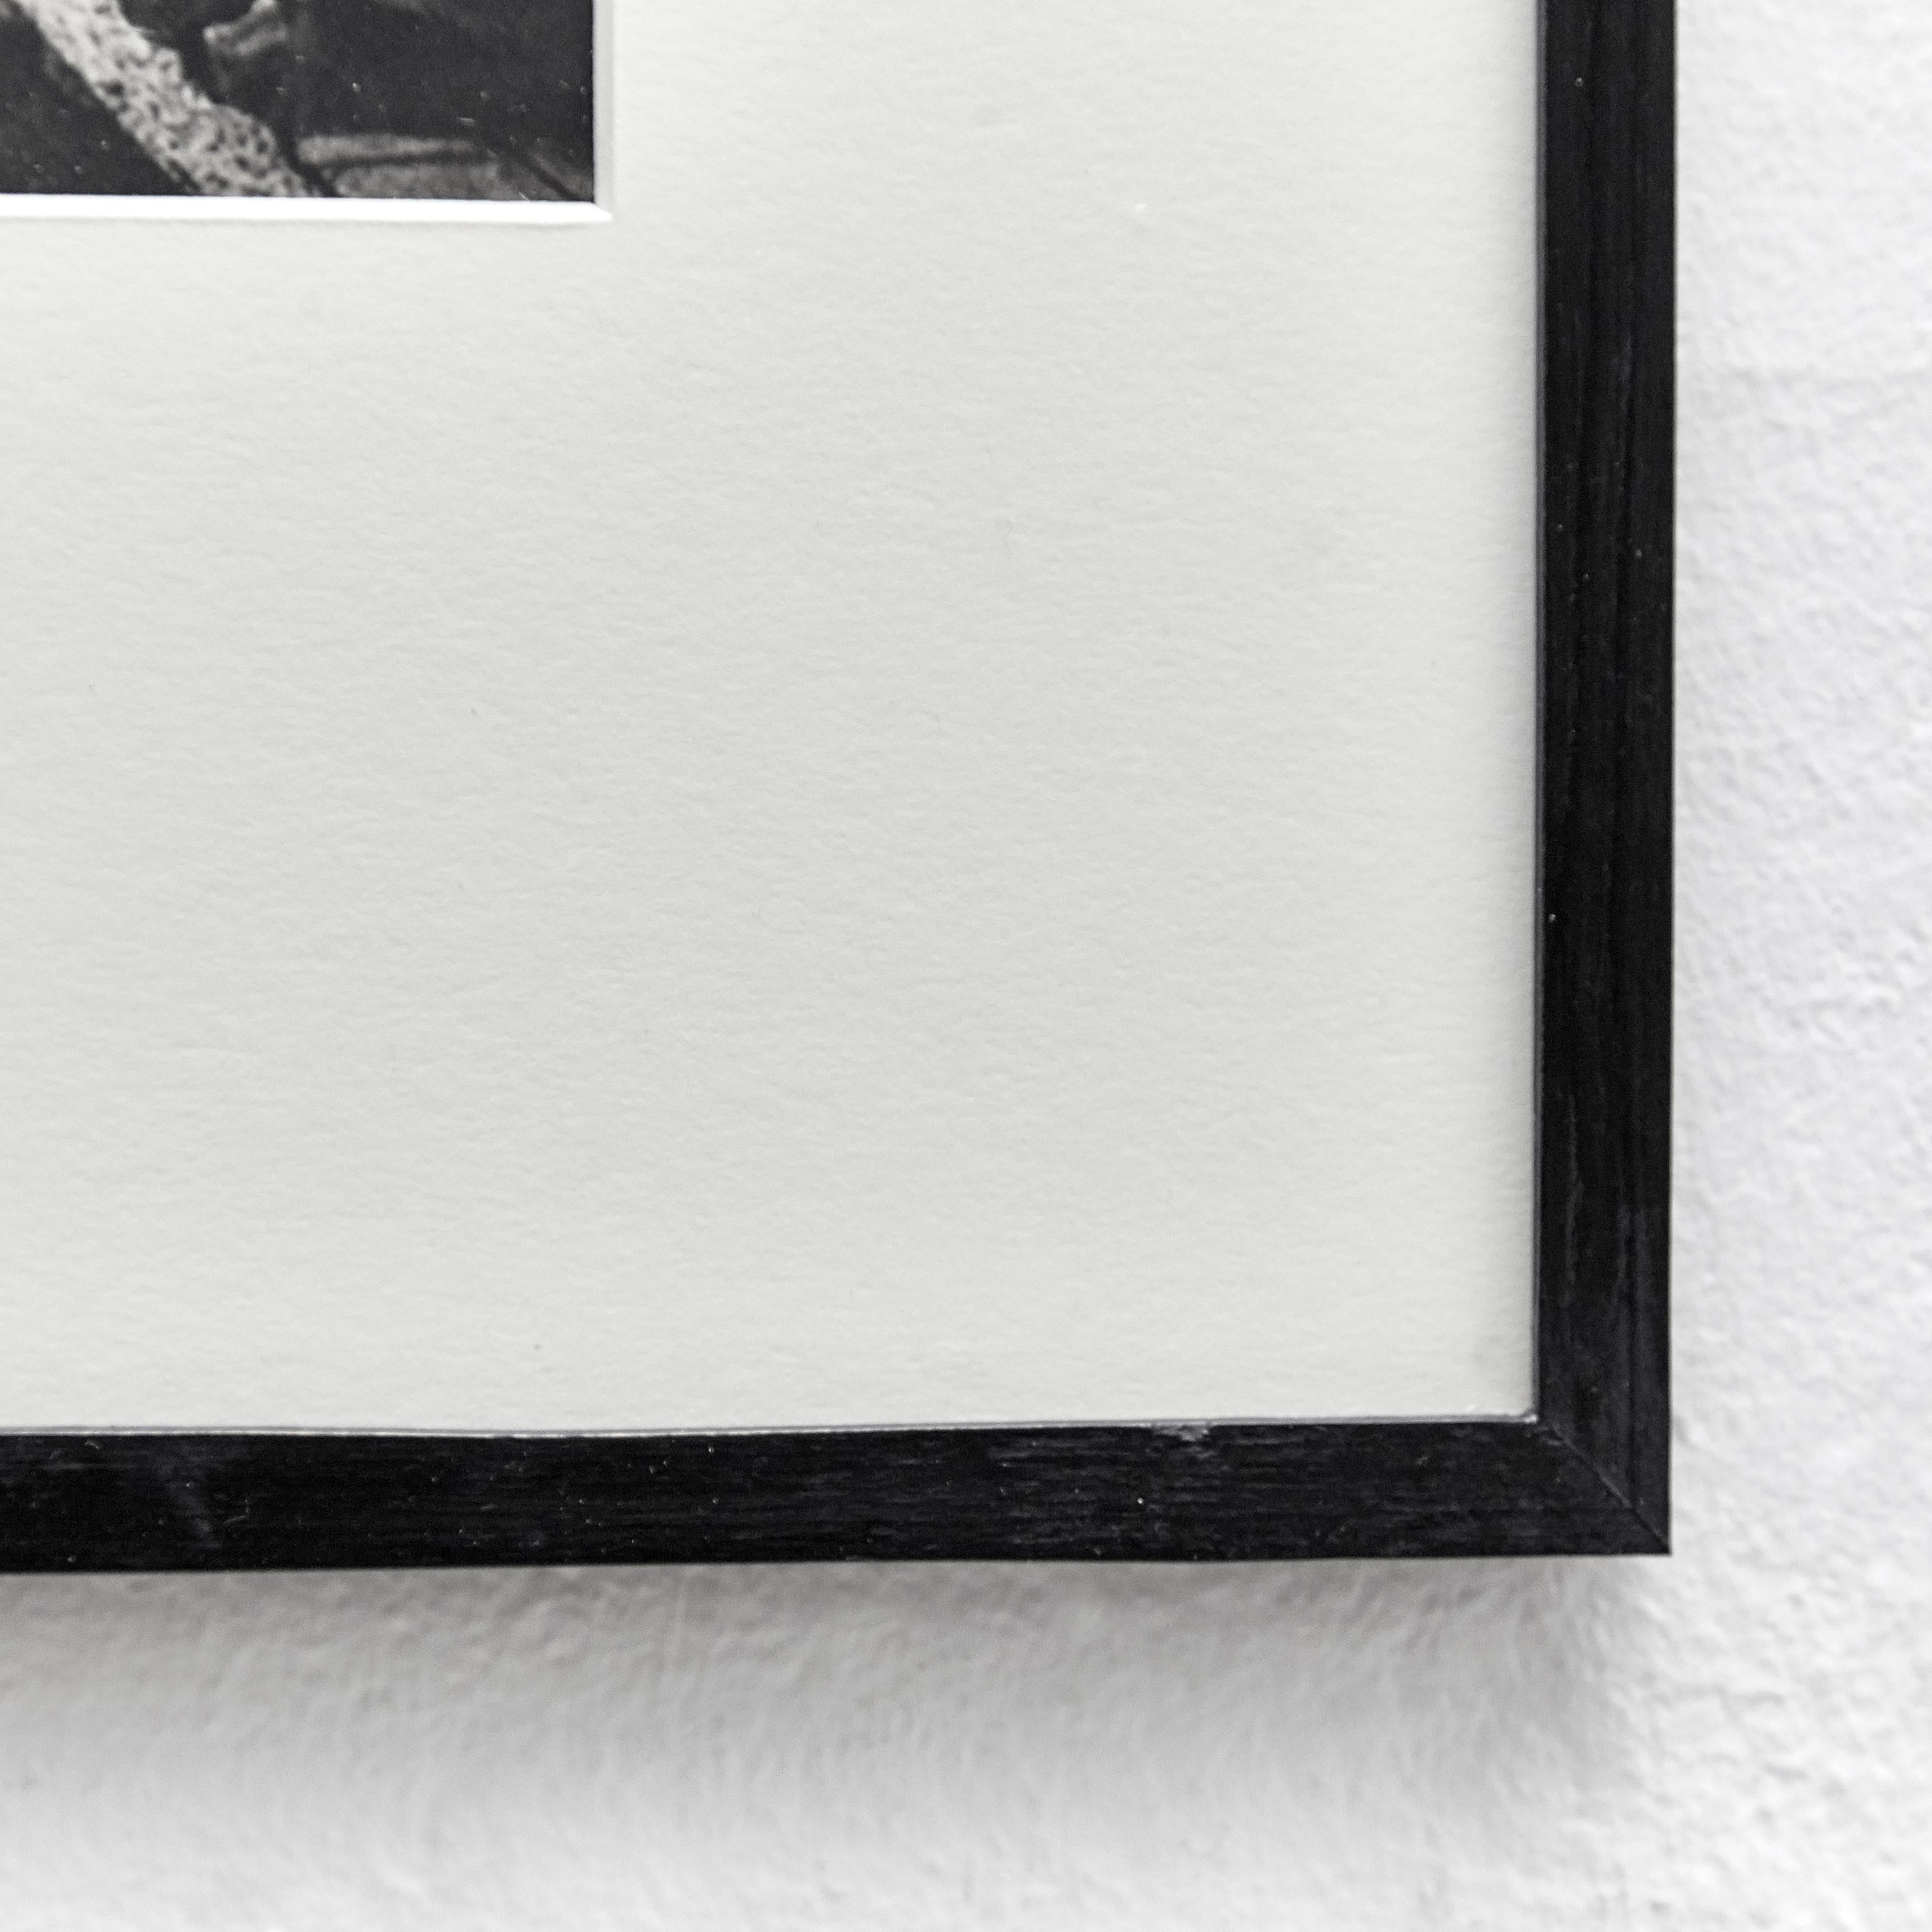 Brassaï, Black and White Photogravure, 1979 6